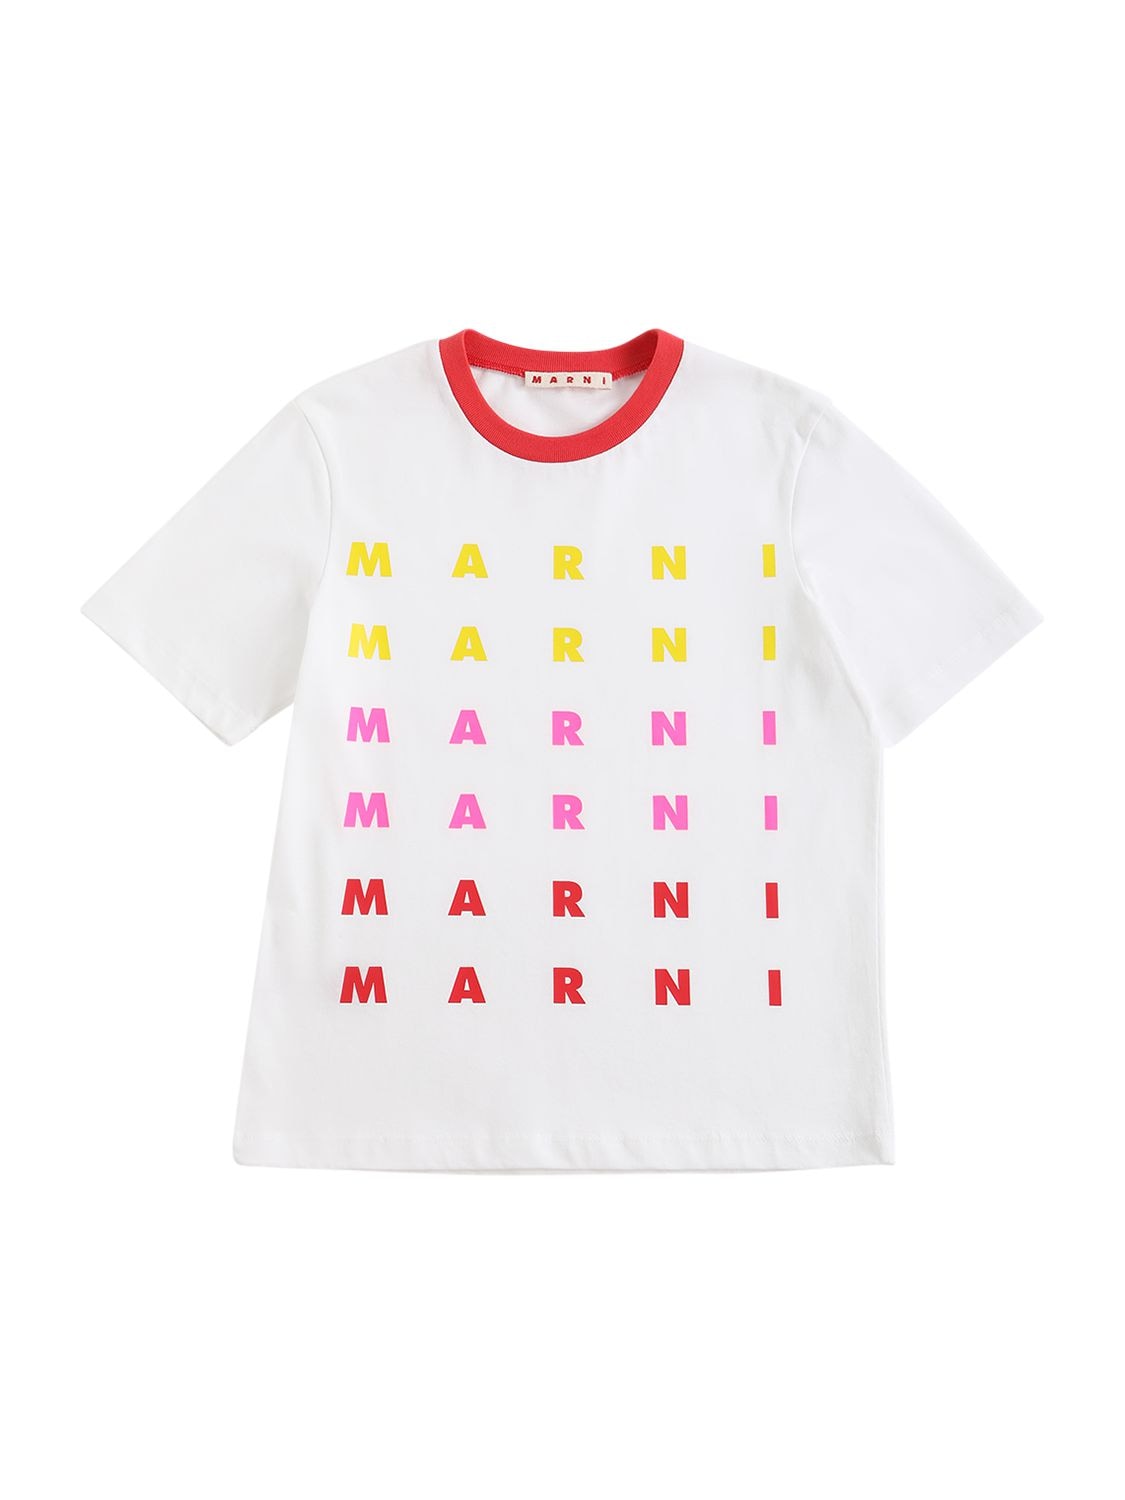 Marni Junior Kids' Logo Print Cotton Jersey T-shirt In White,multi